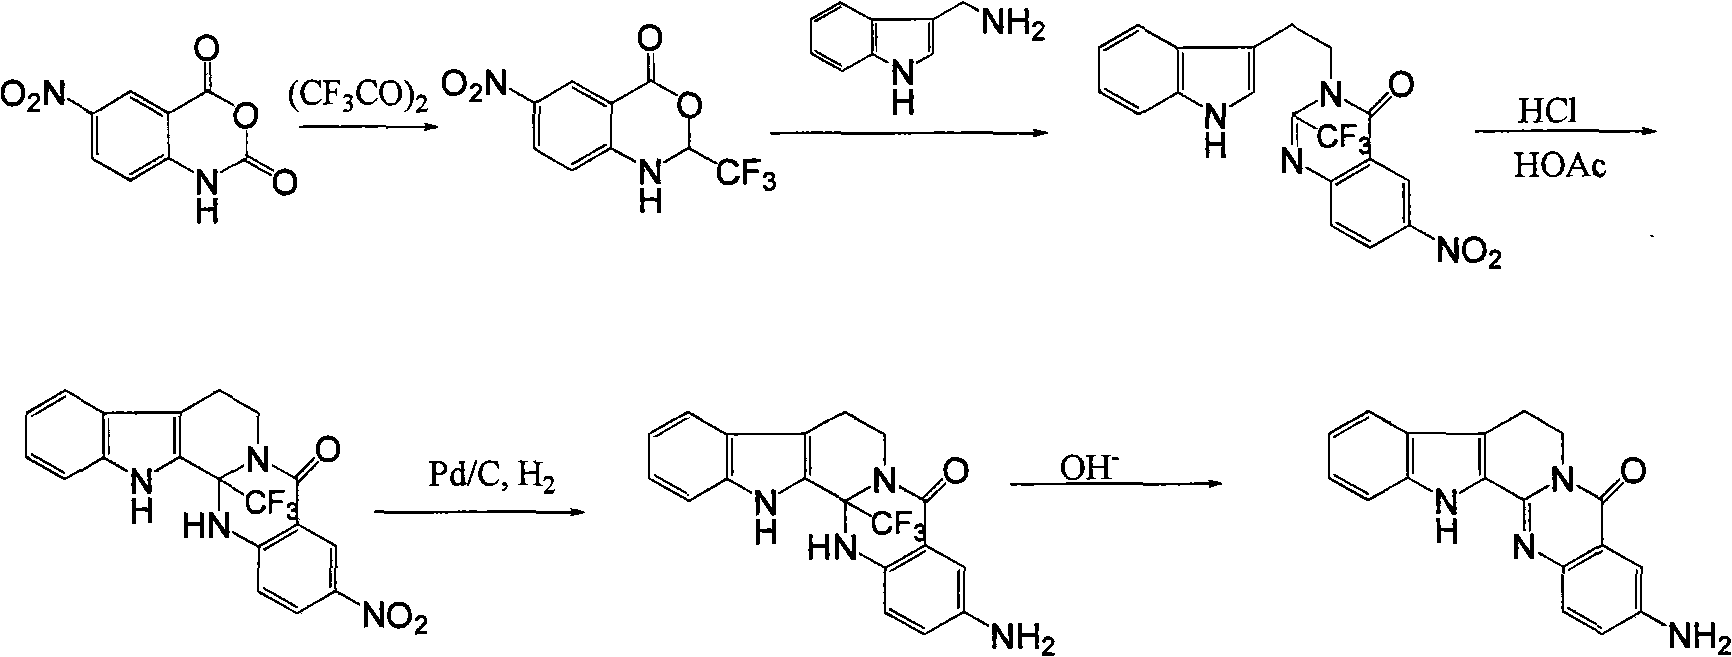 3-aminoalkaneacylamino-rutaecarpine and 3-aminoalkaneacylamino-7,8-dehydrorutaecarpine derivative